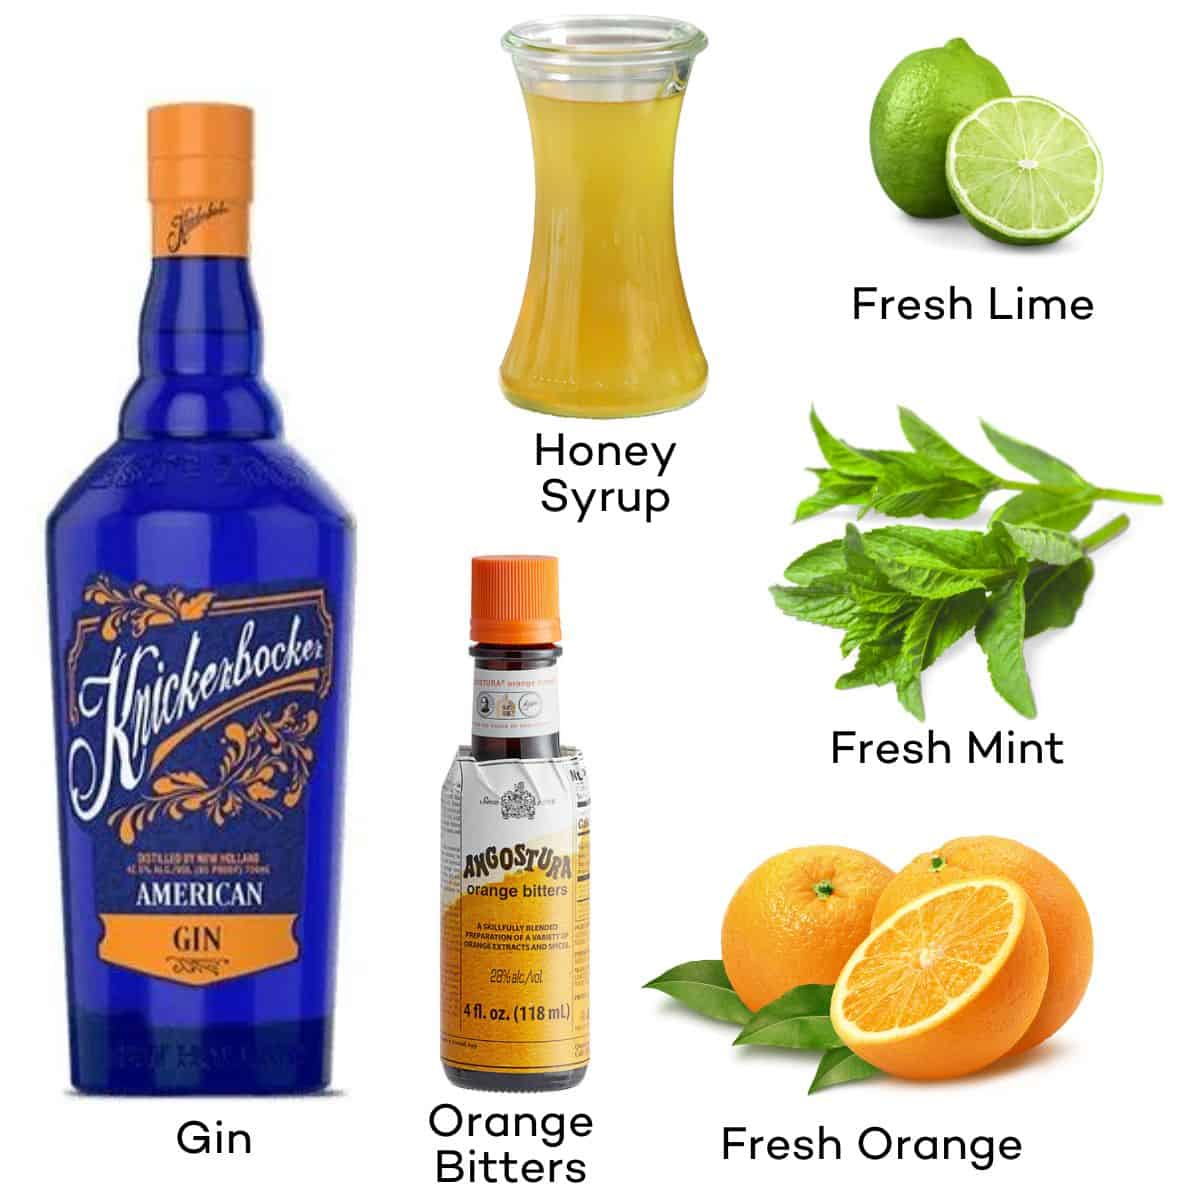 Ingredients for Honey Orange Gin cocktails - gin, honey syrup, orange, lime, mint, orange bitters.